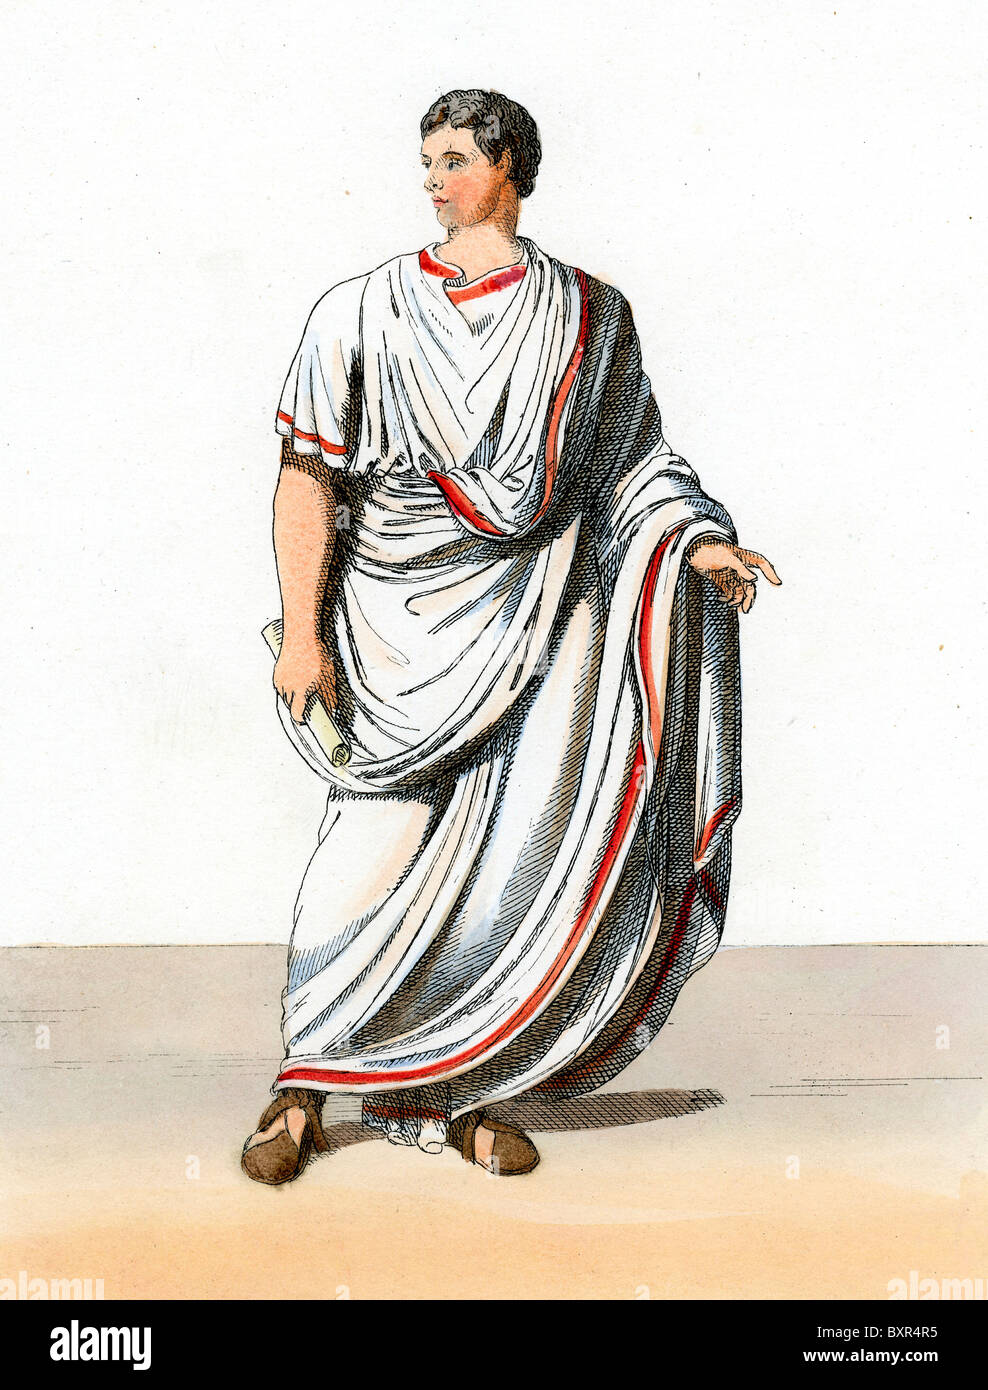 Roman Consul Dressed in Toga (c19th engraving Stock Photo - Alamy